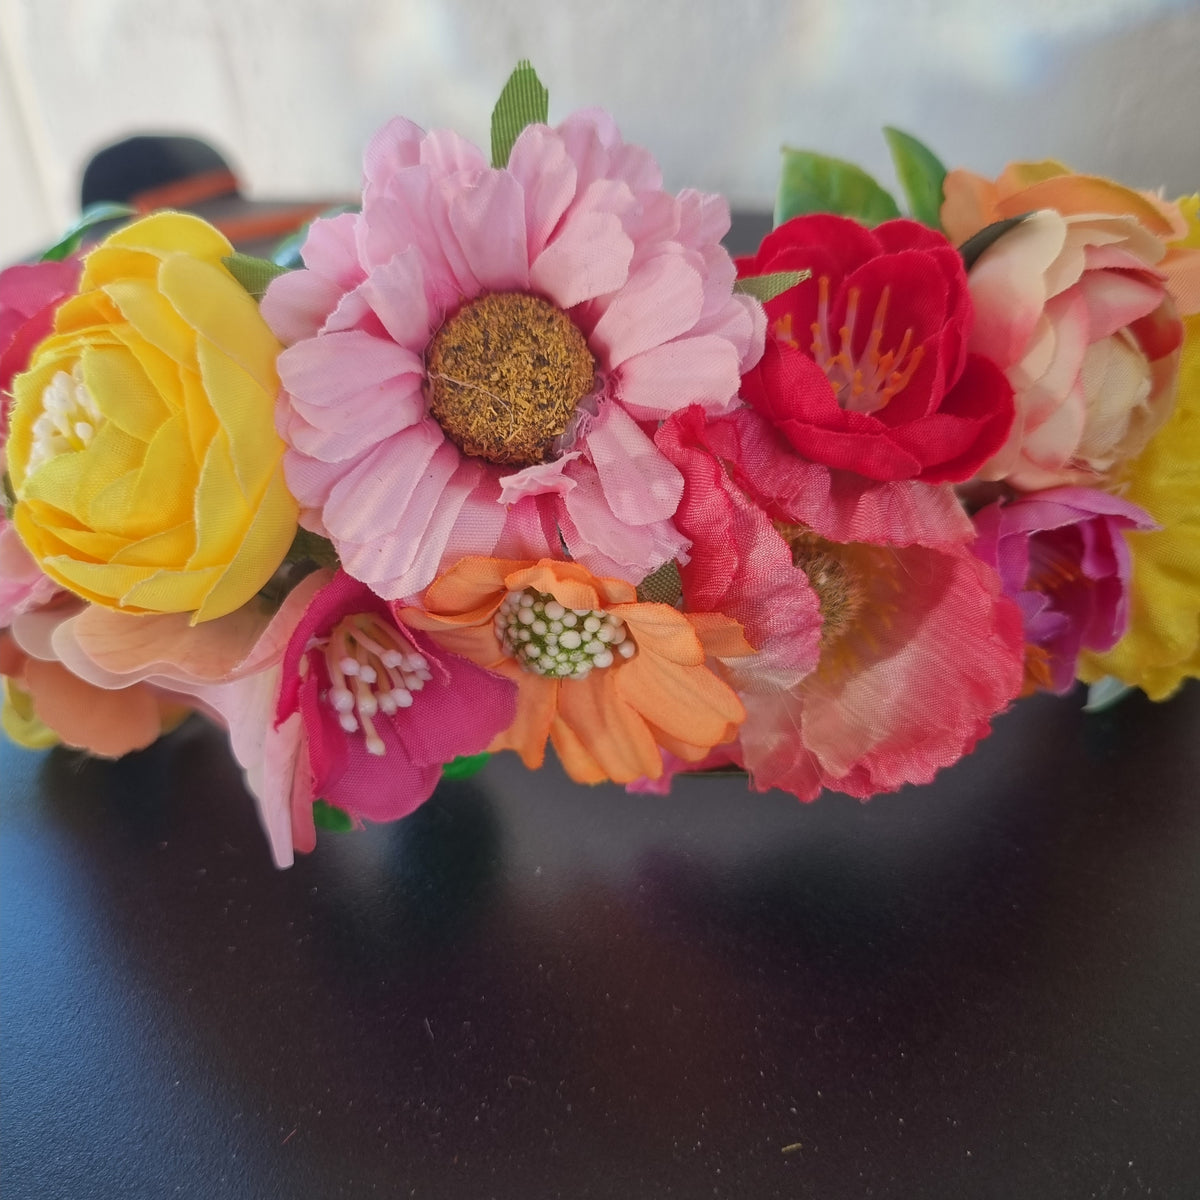 Farveglad blomsterkrone - Hårpynt med blomster og perler til bryllup, konfirmation og fest